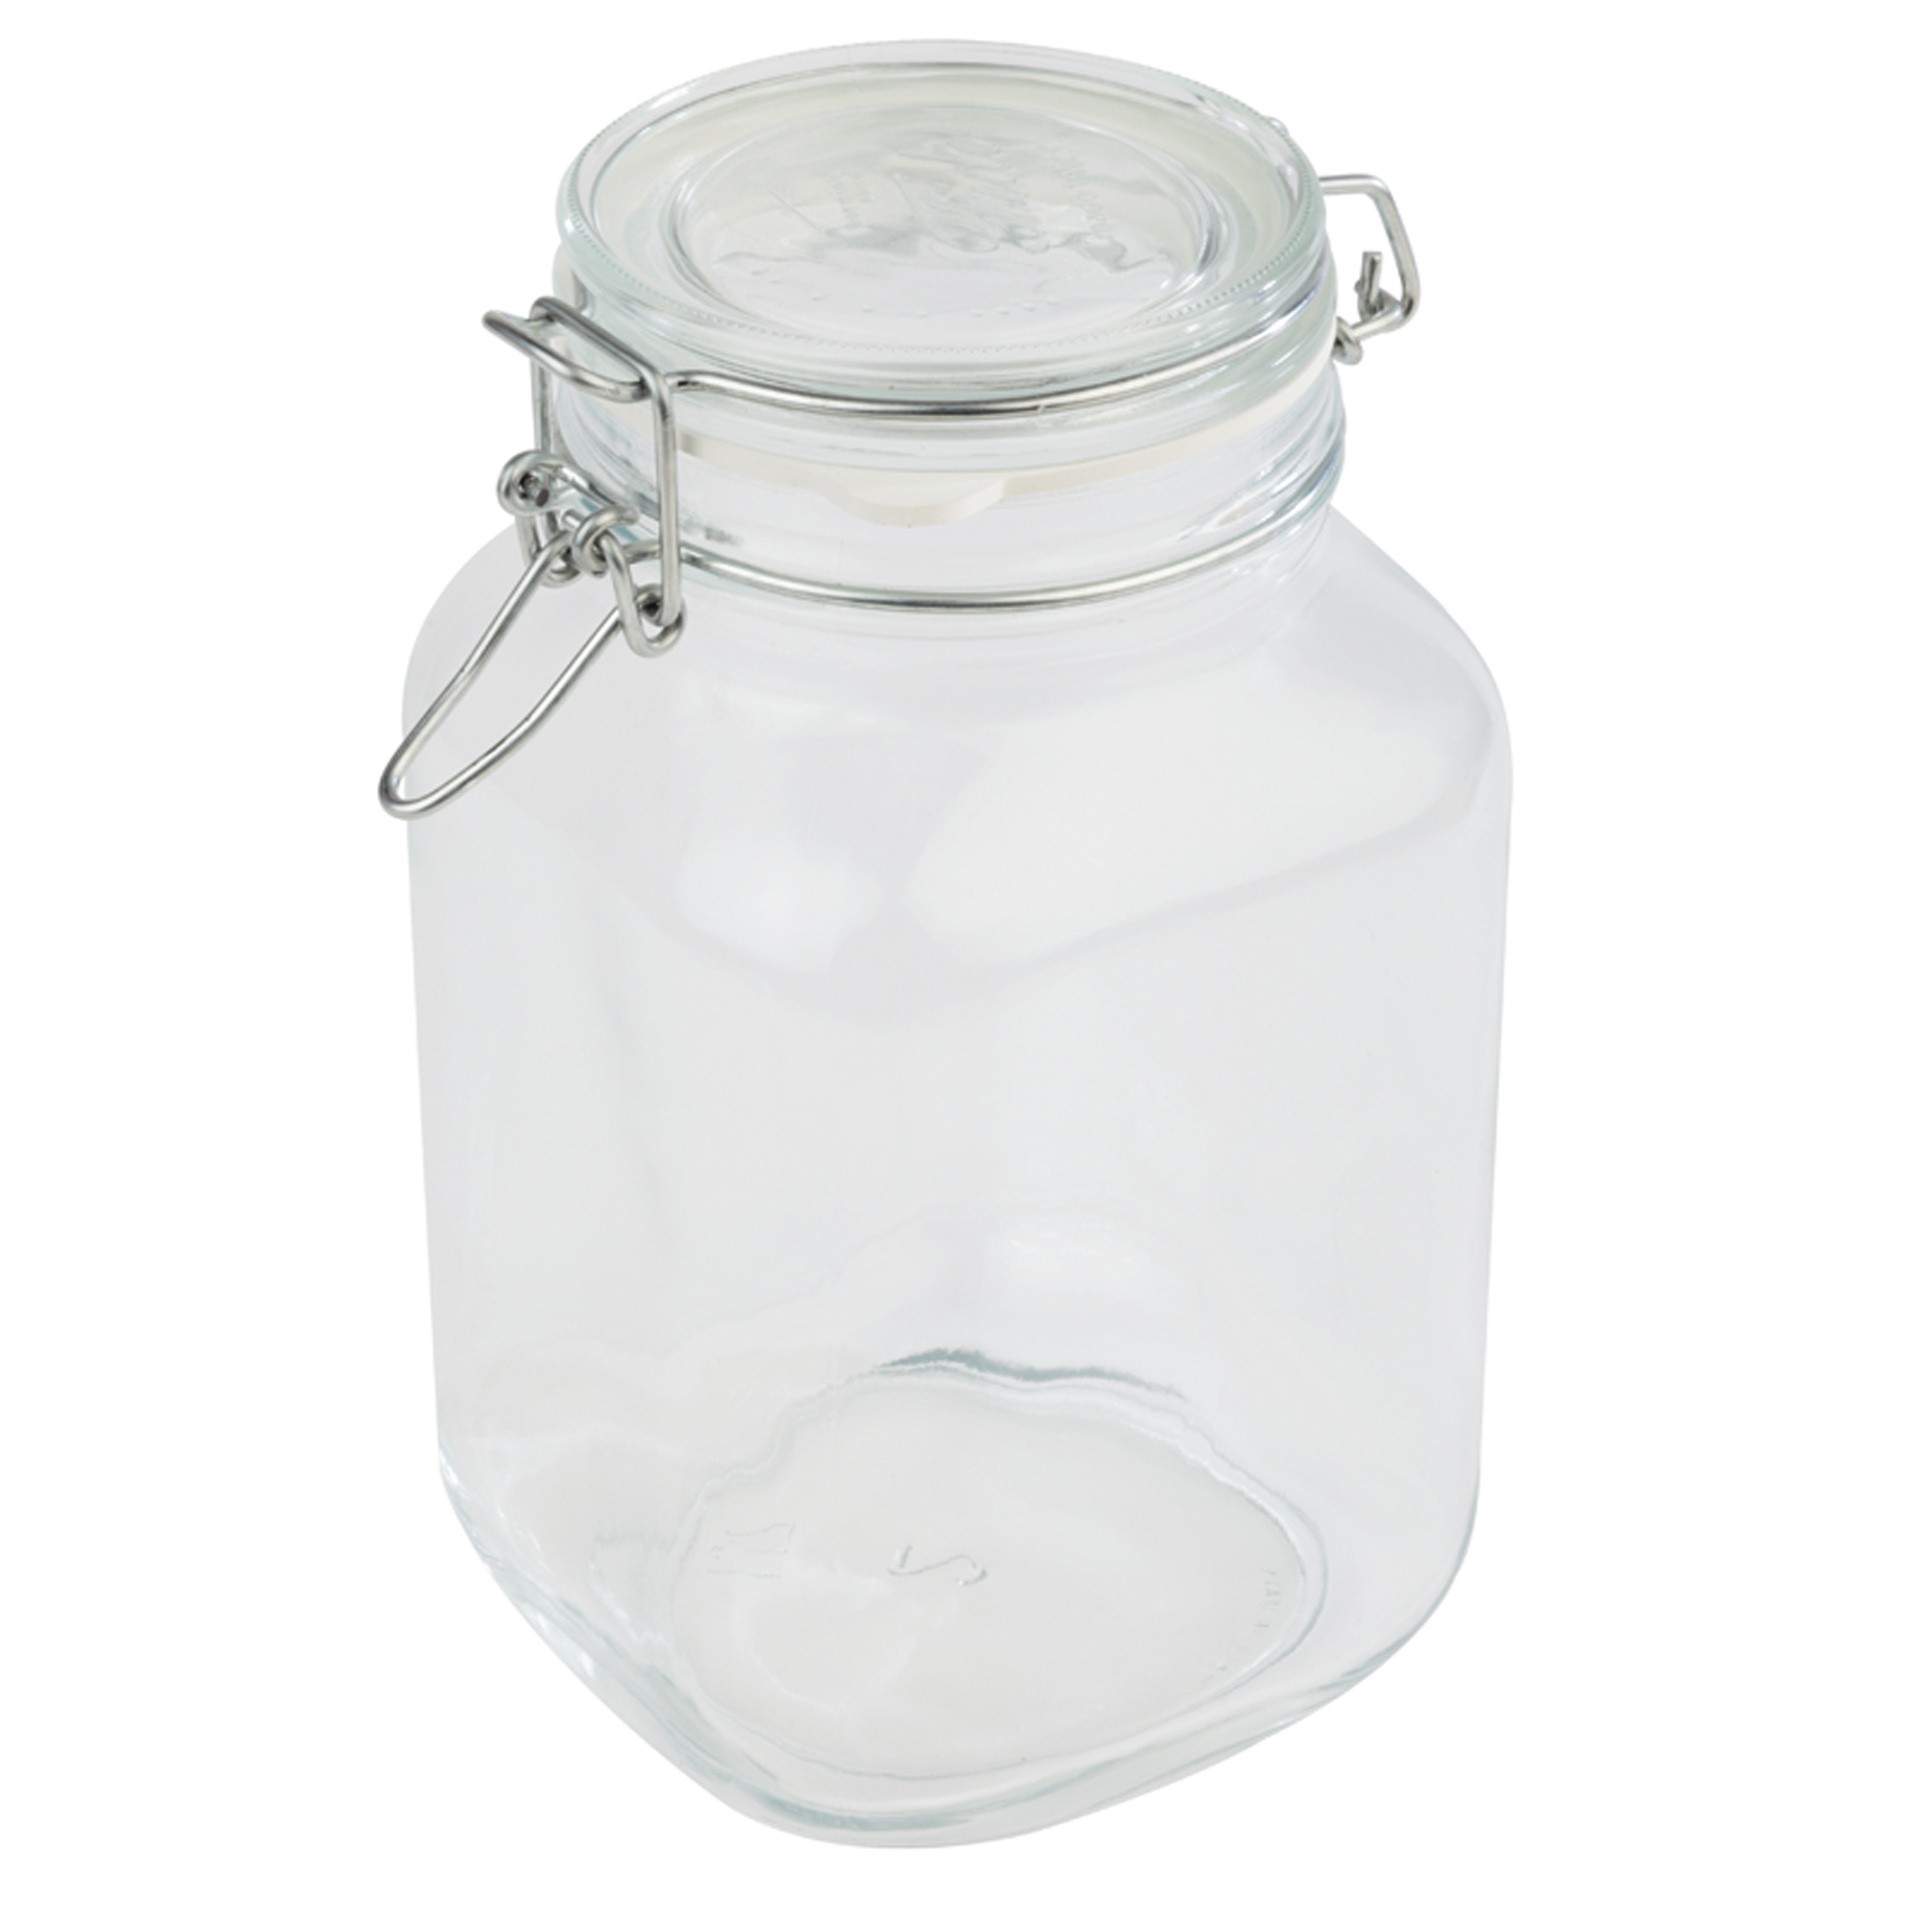 Glas - mit luftdichtem Klappdeckel - transparent - Abm. 22 cm - Ø 12,0 cm - Inhalt 2 l - Glas - 82328-B